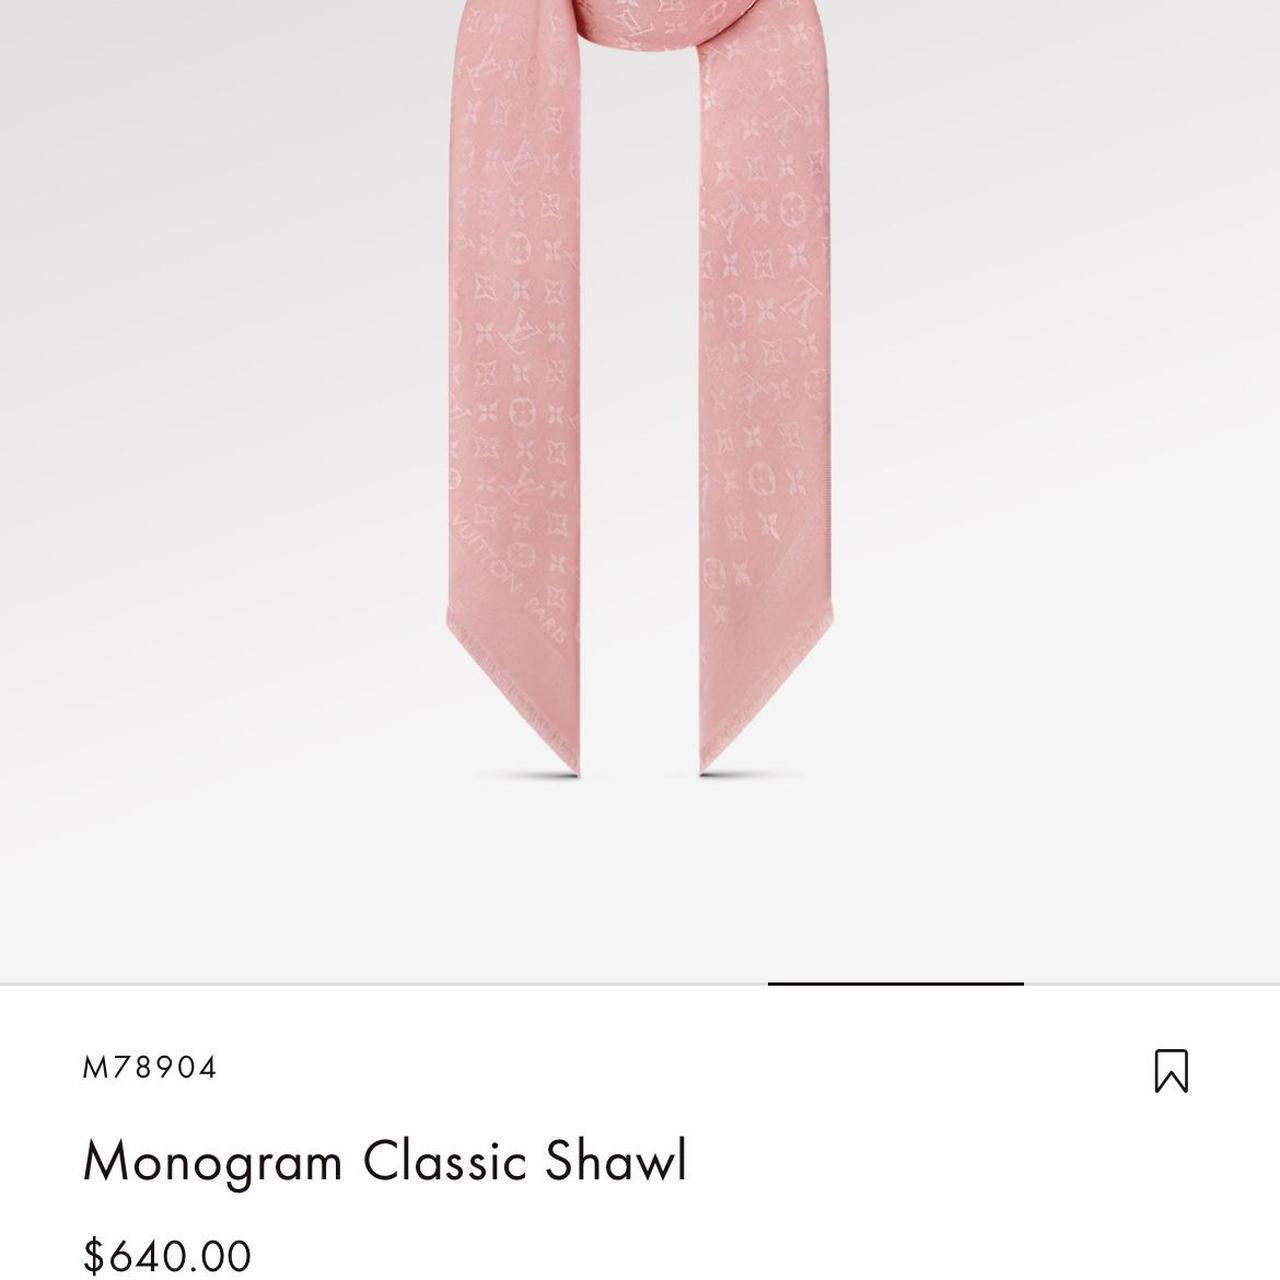 Louis Vuitton Monogram Classic Shawl